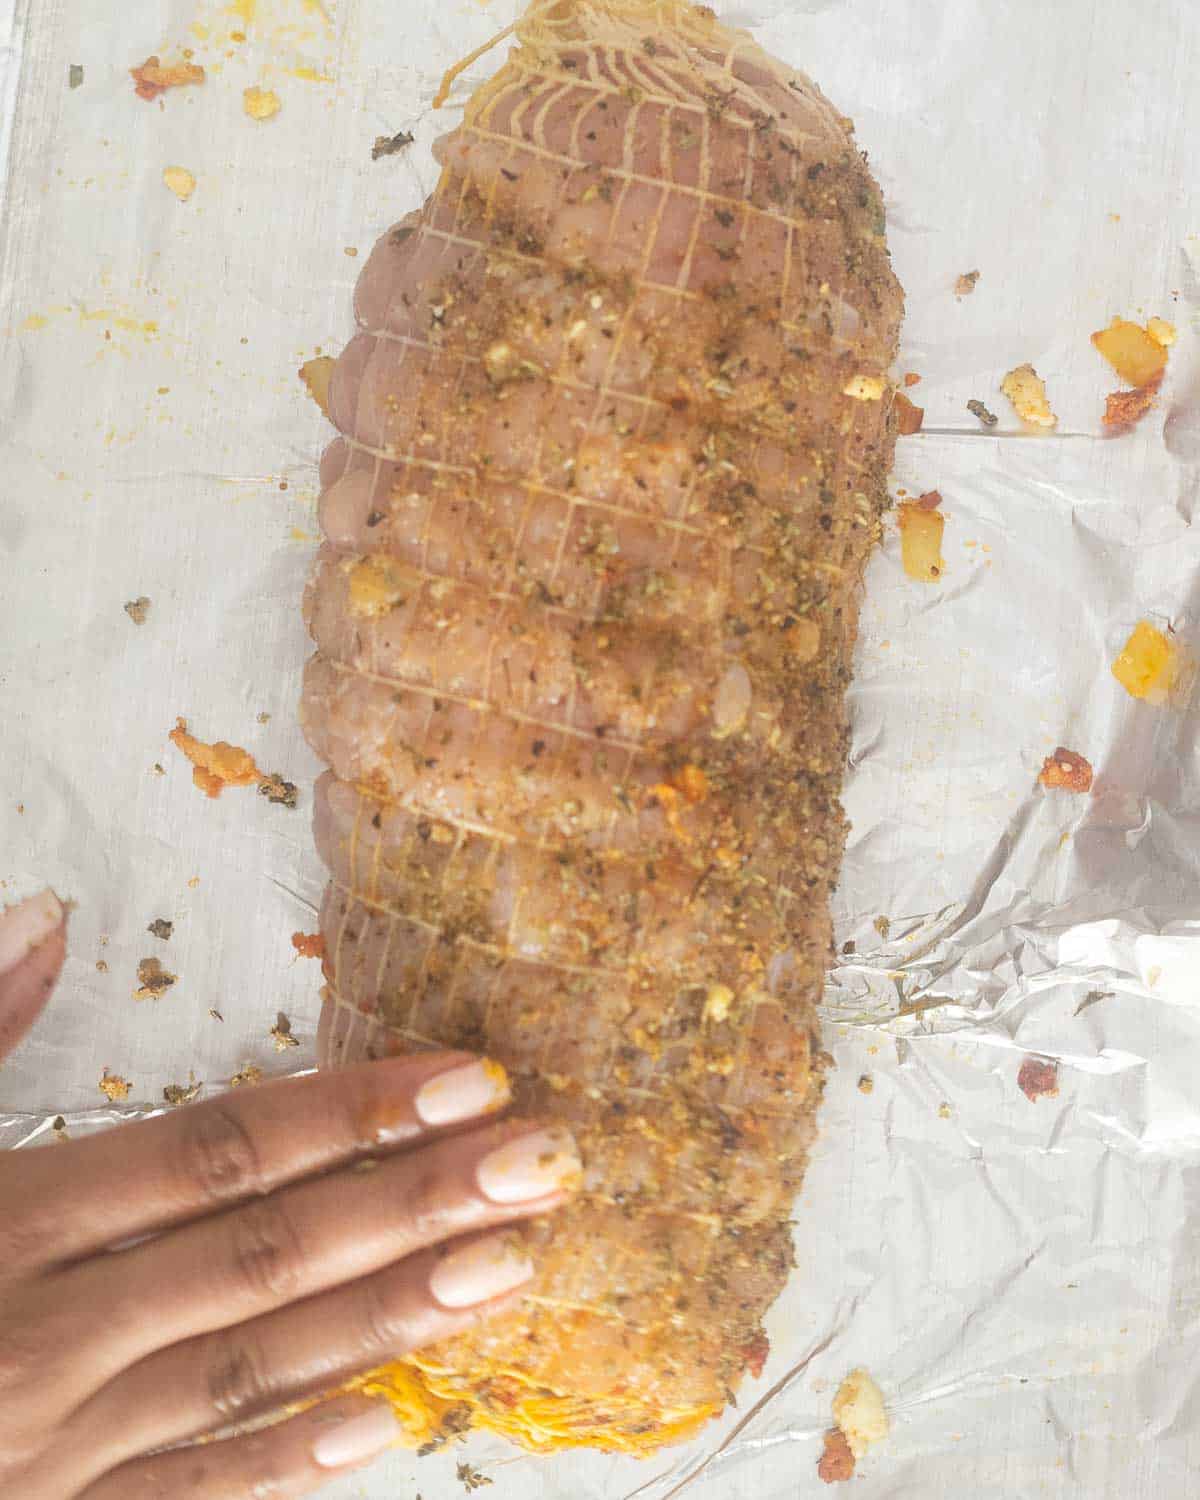 A turkey roll seasoned on a chopping board.